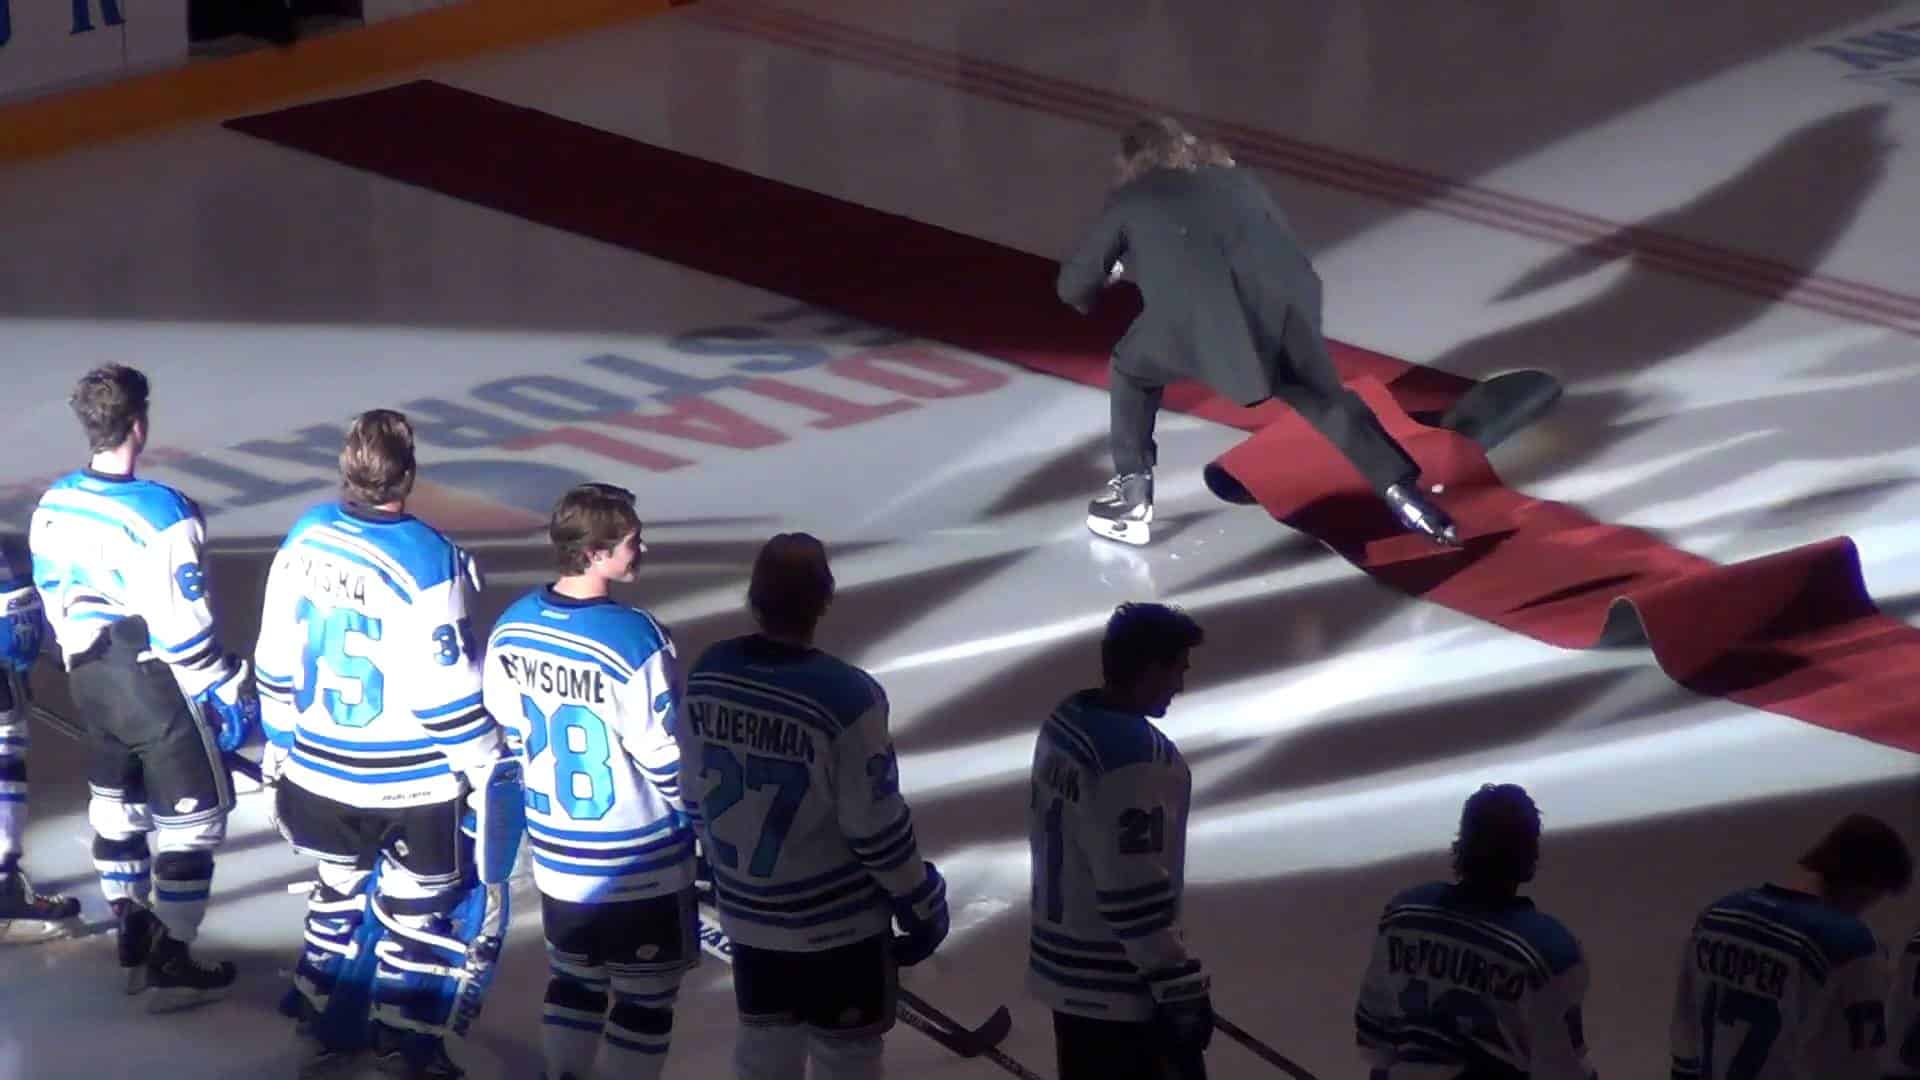 Slapstick at an ice hockey match: "Oh Canada" On Ice